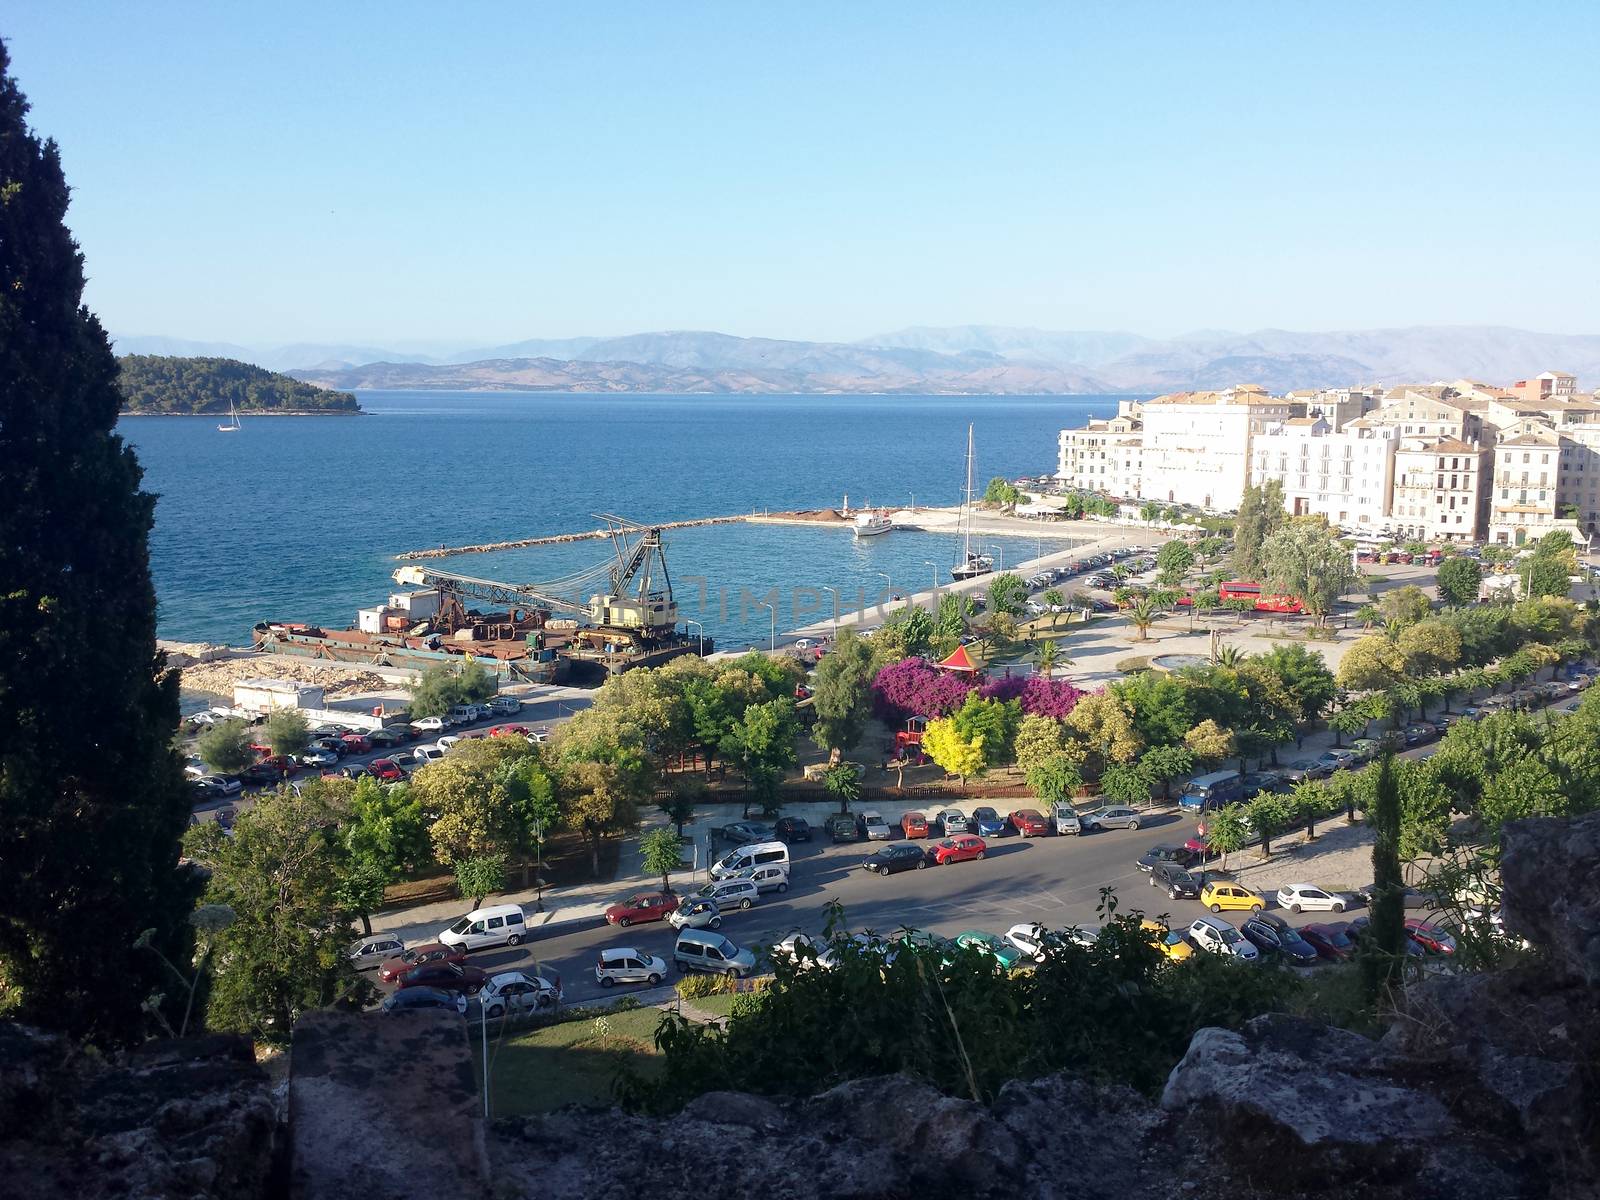 A panoramic view of Corfu city,Corfu Island, Greece.

Picture taken on July 1, 2014.